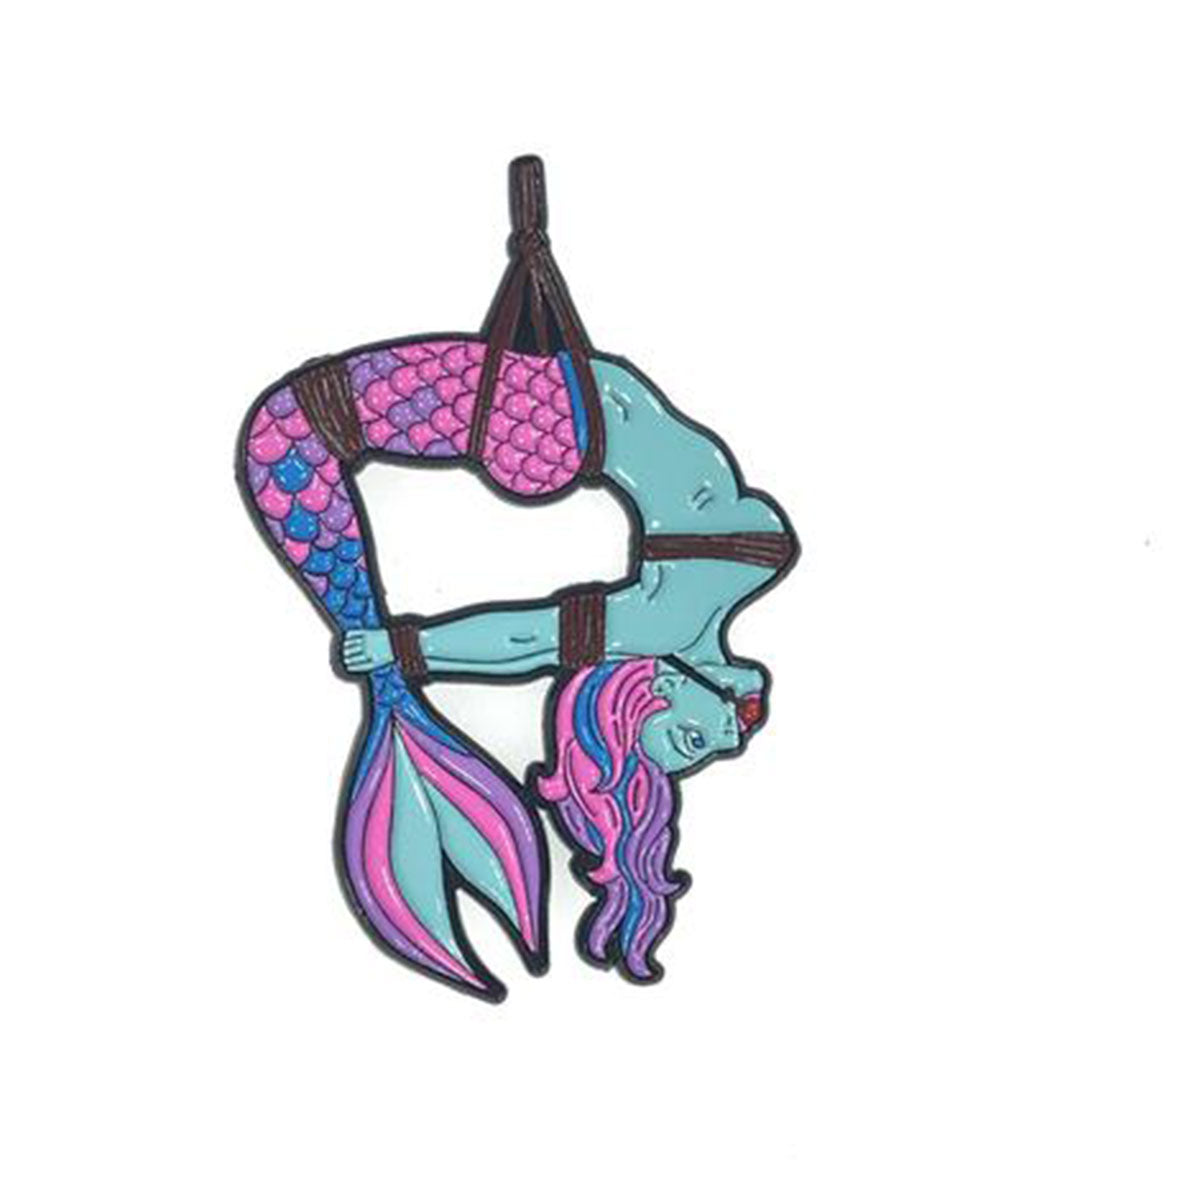 Geeky and Kinky Mermaid Pin - Aqua/Purple